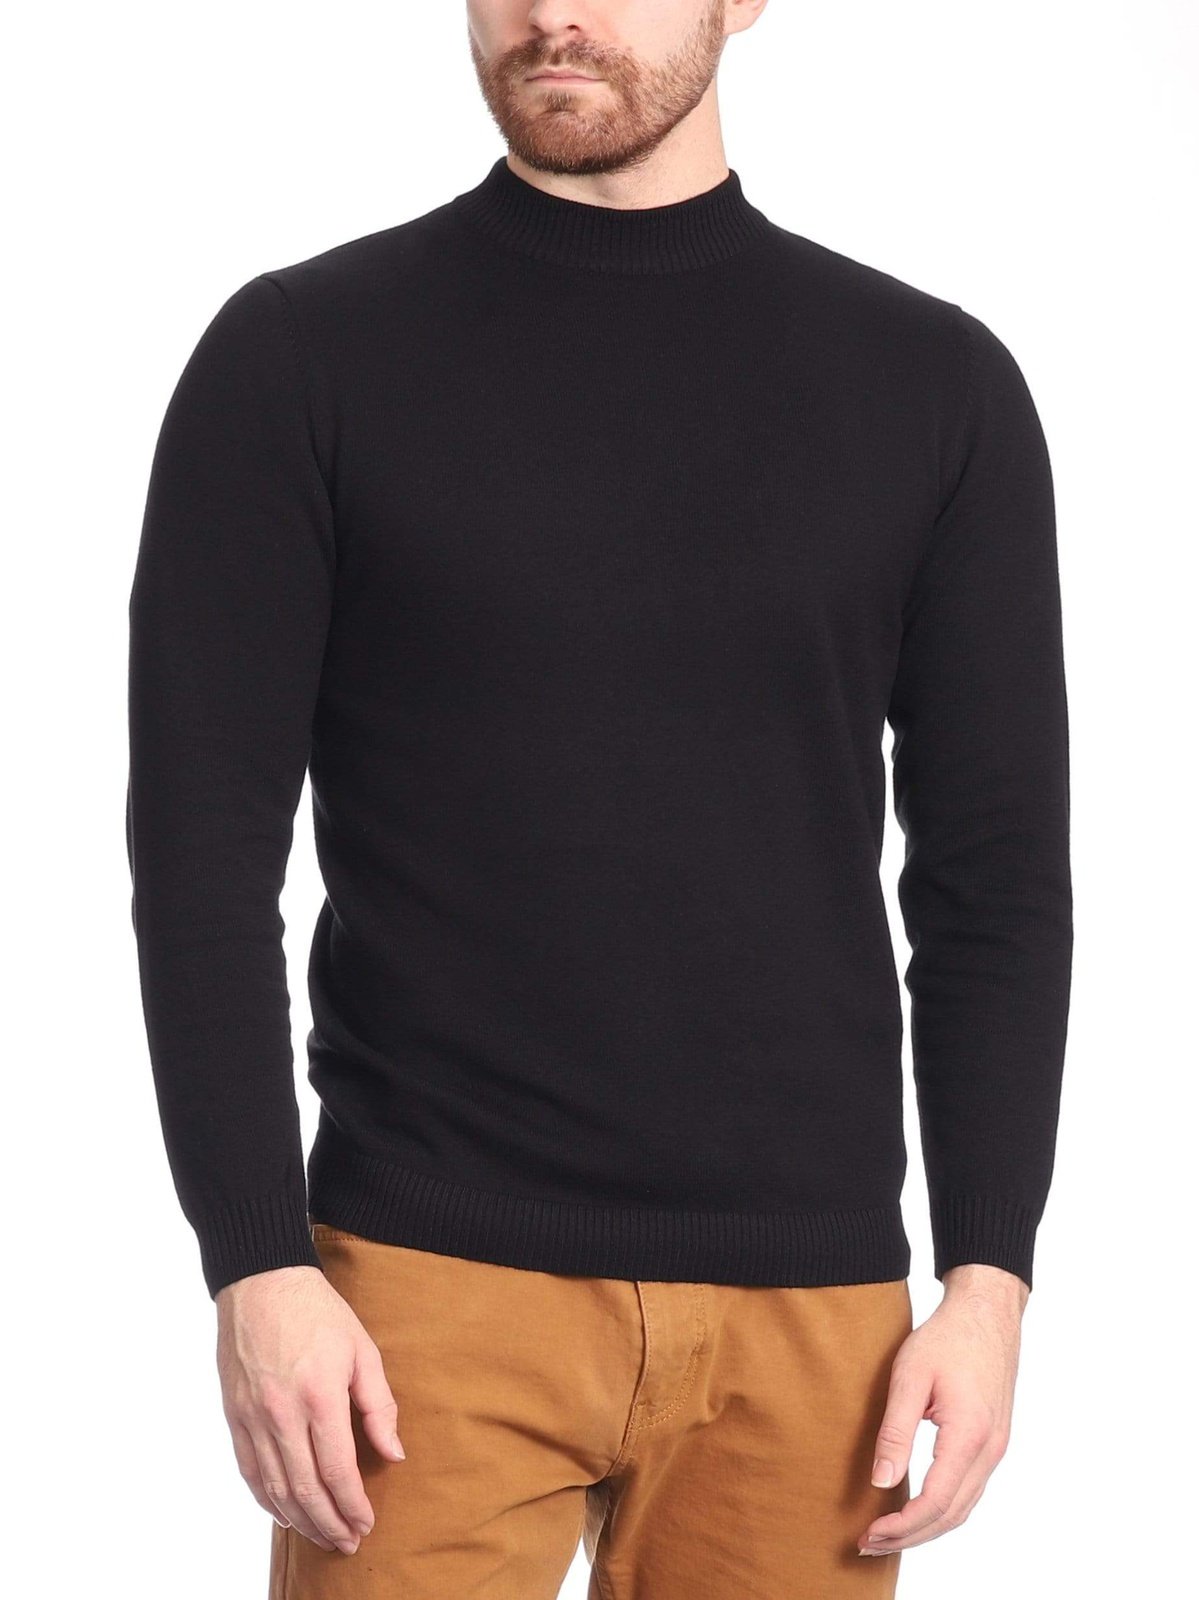 Arthur Black Men\'s Solid Black Pullover Cotton Blend Mock Neck Sweater Shirt  | The Suit Depot